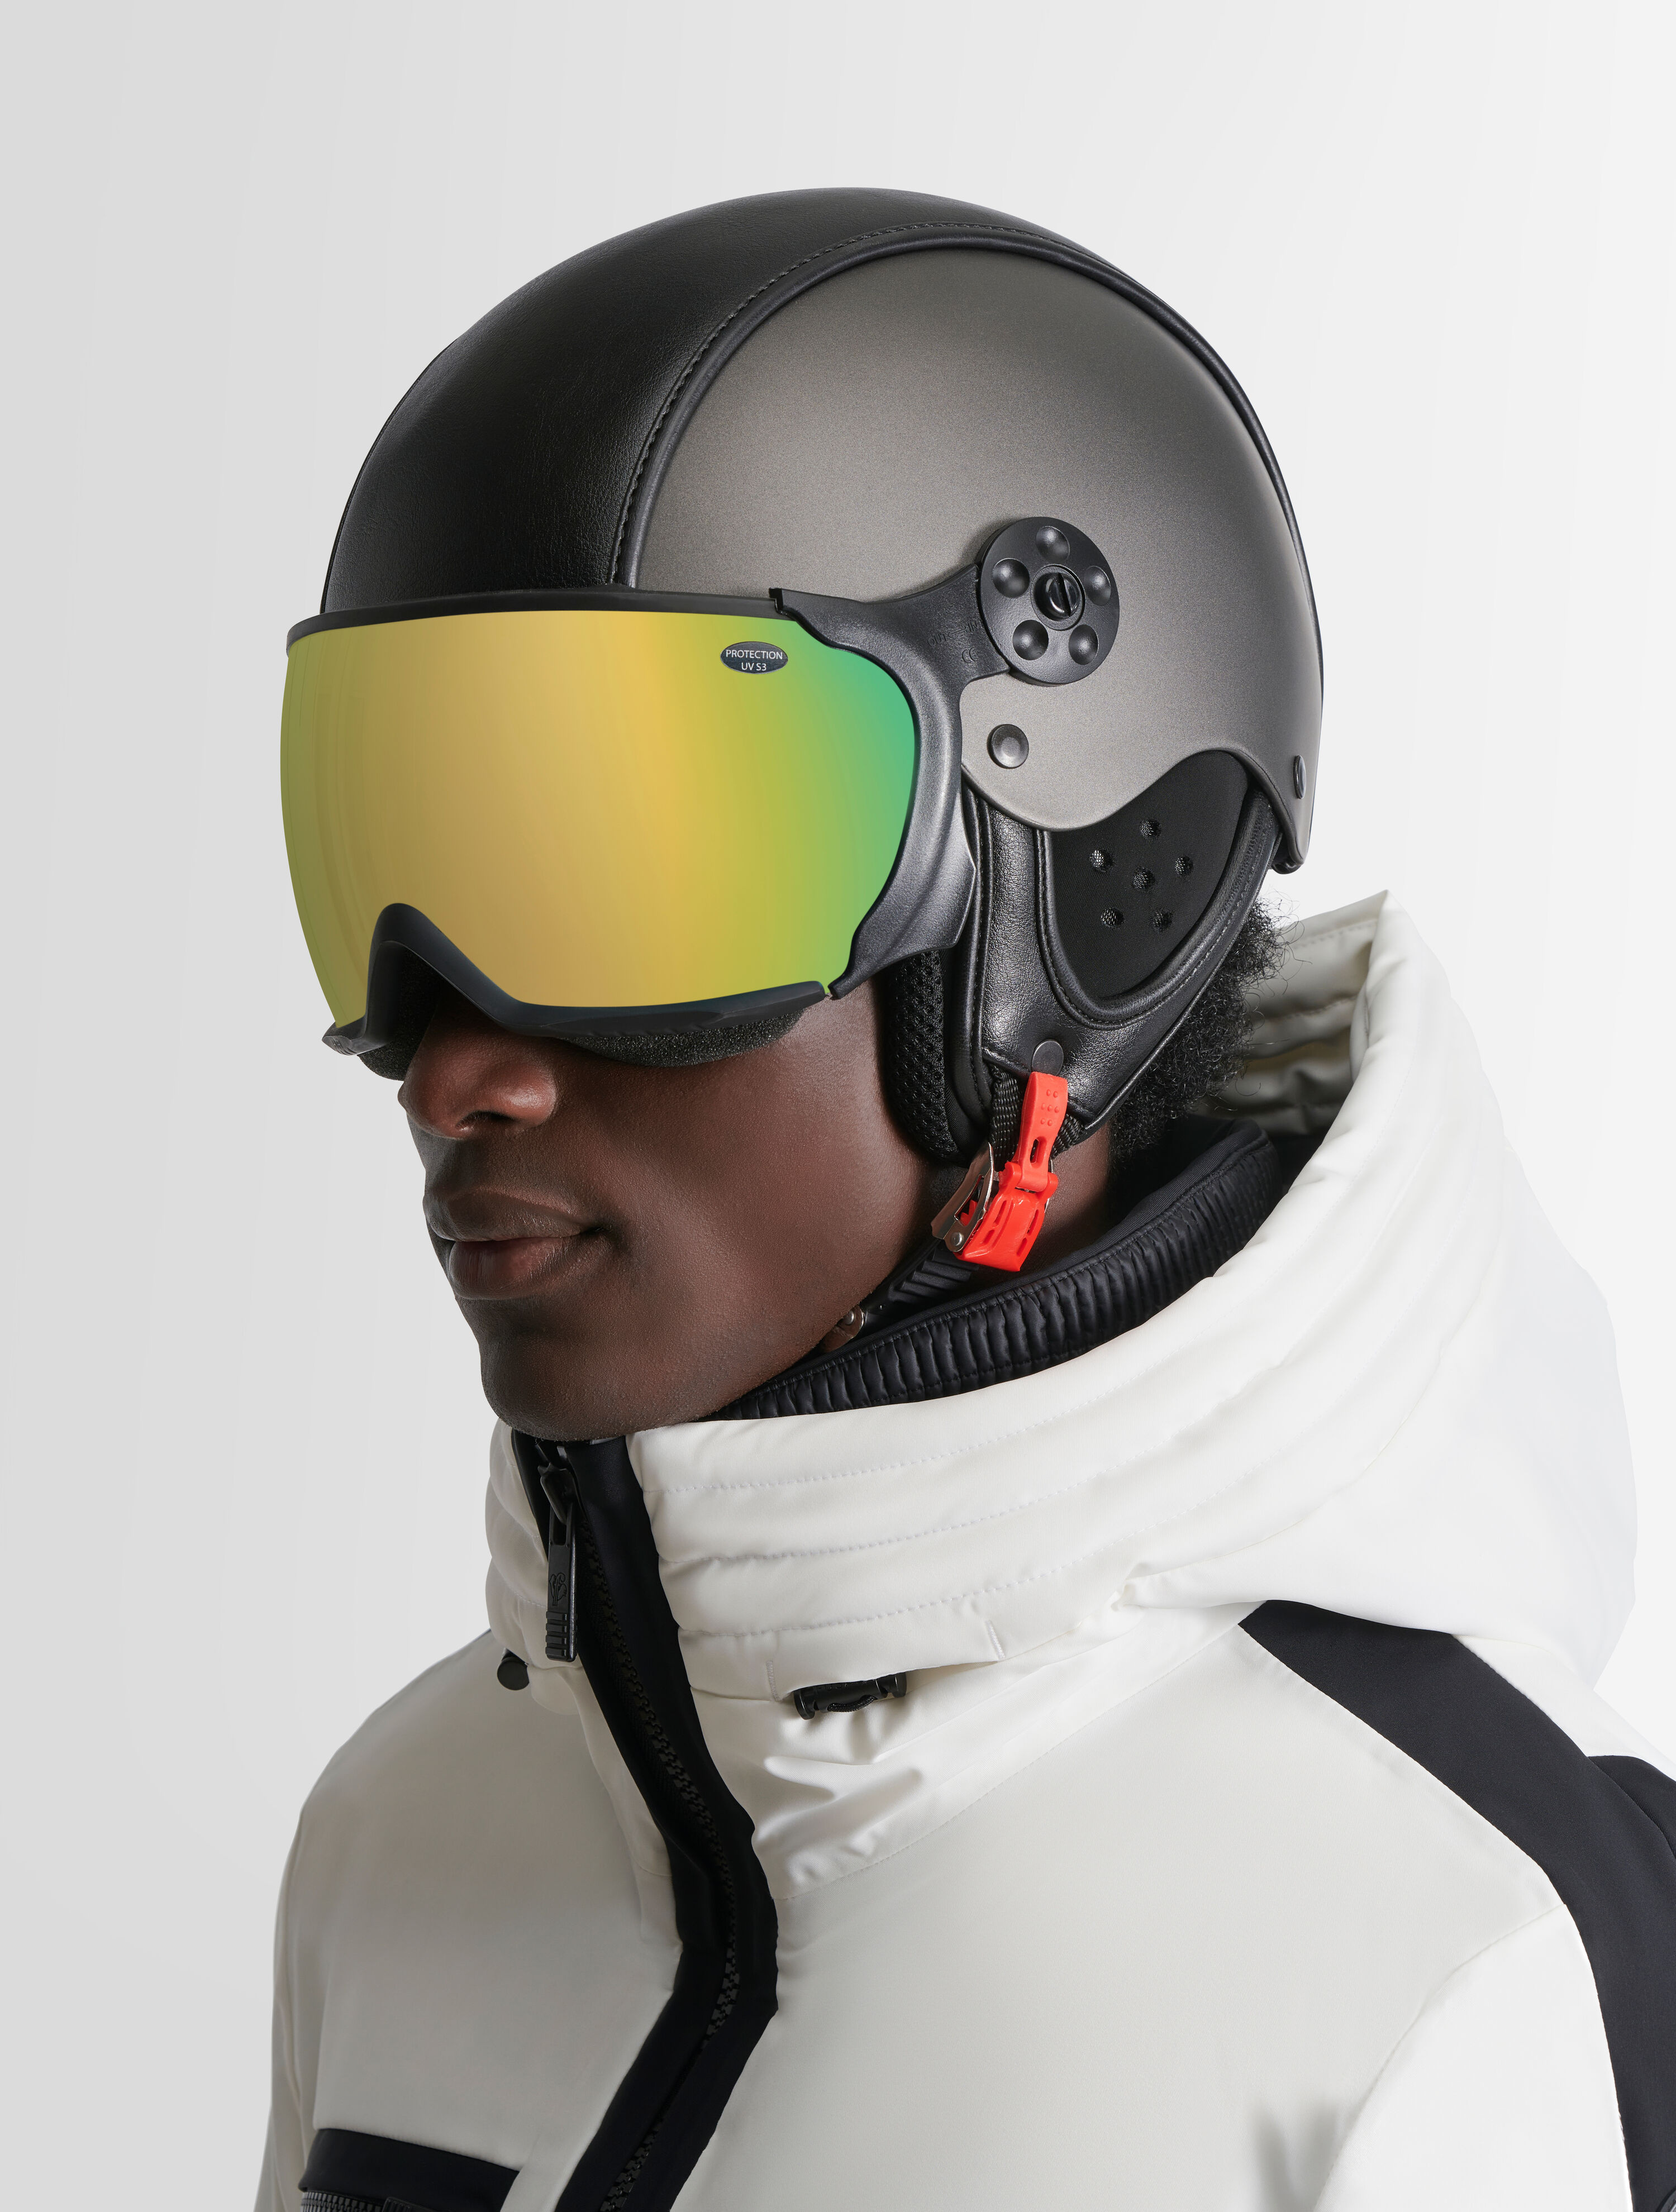 Masque de ski Homme, Femme & Enfant - Livraison offerte